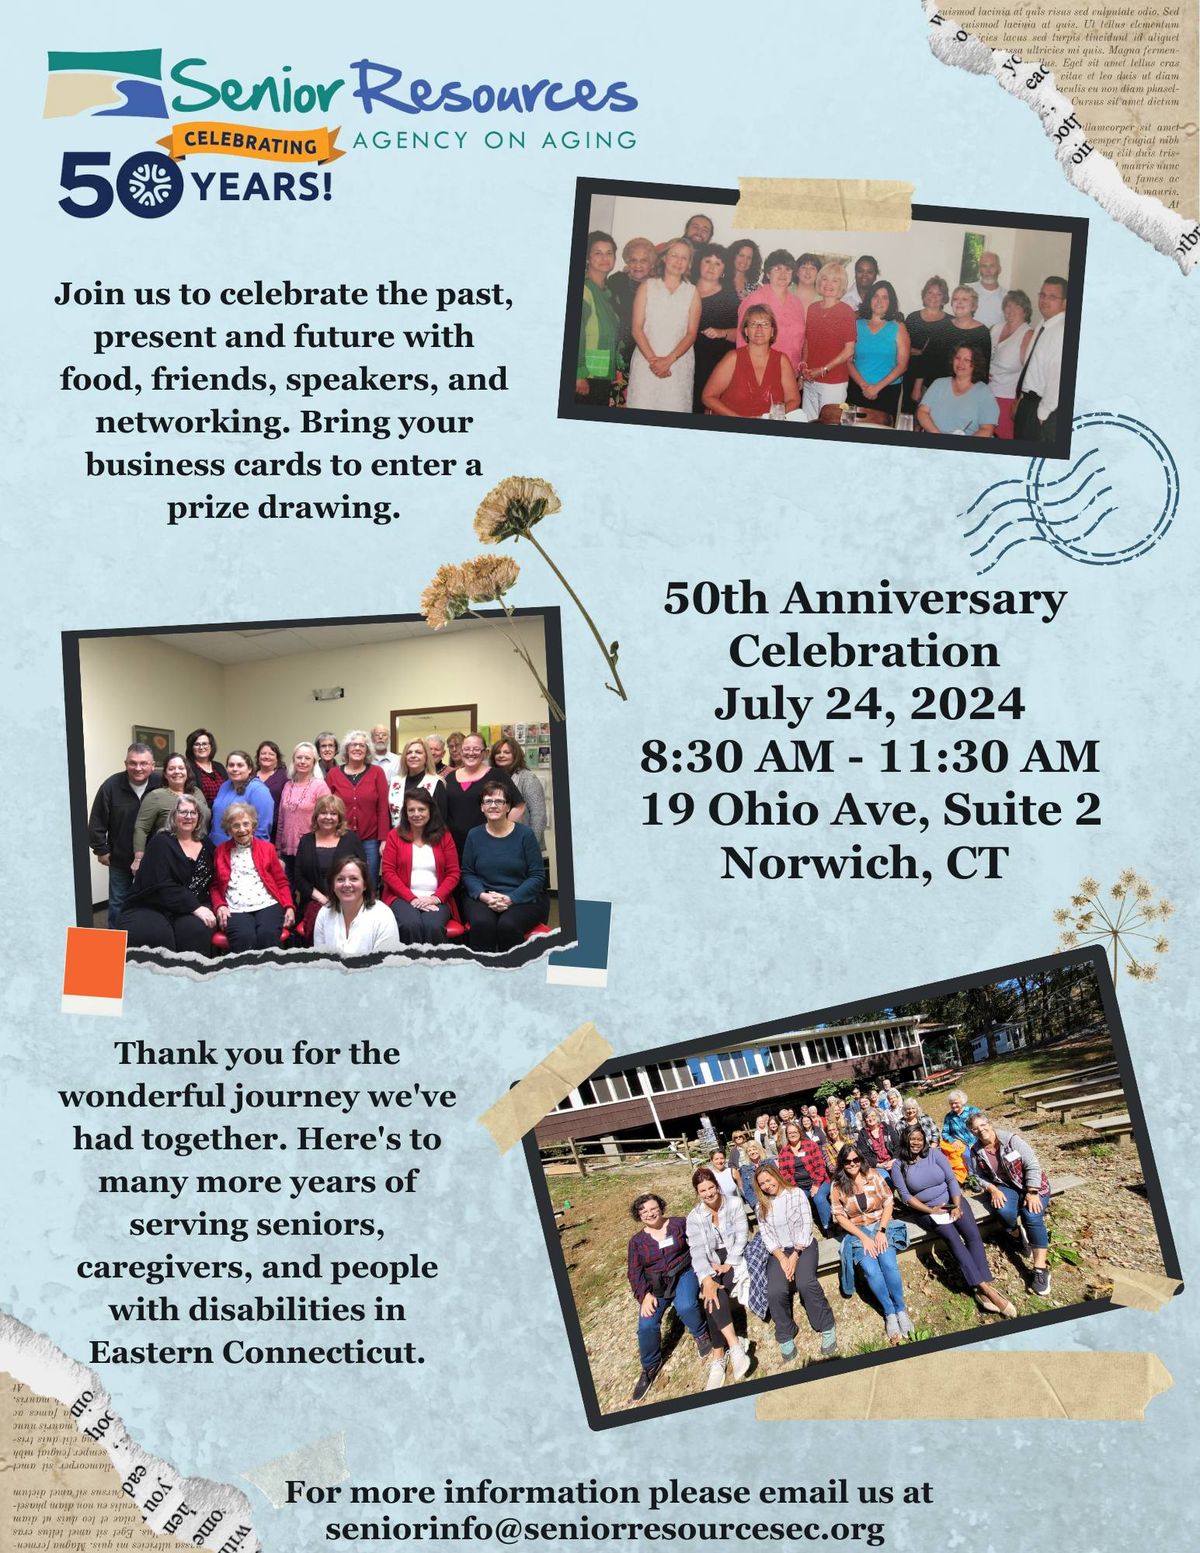 Senior Resources 50th Anniversary Celebration!